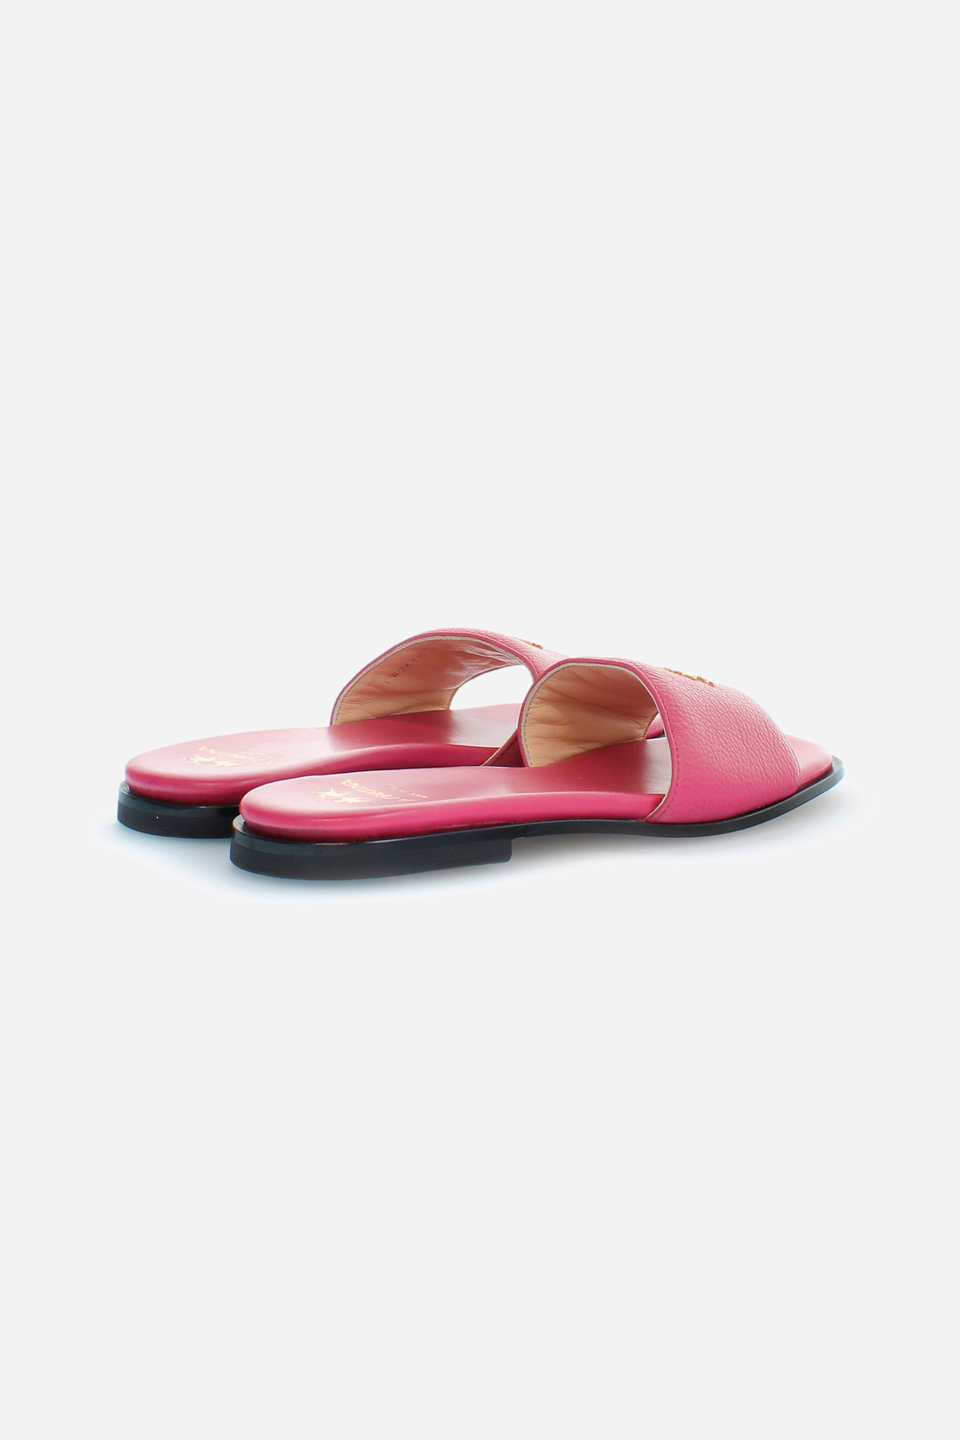 Women's sandals in leather | La Martina - Official Online Shop